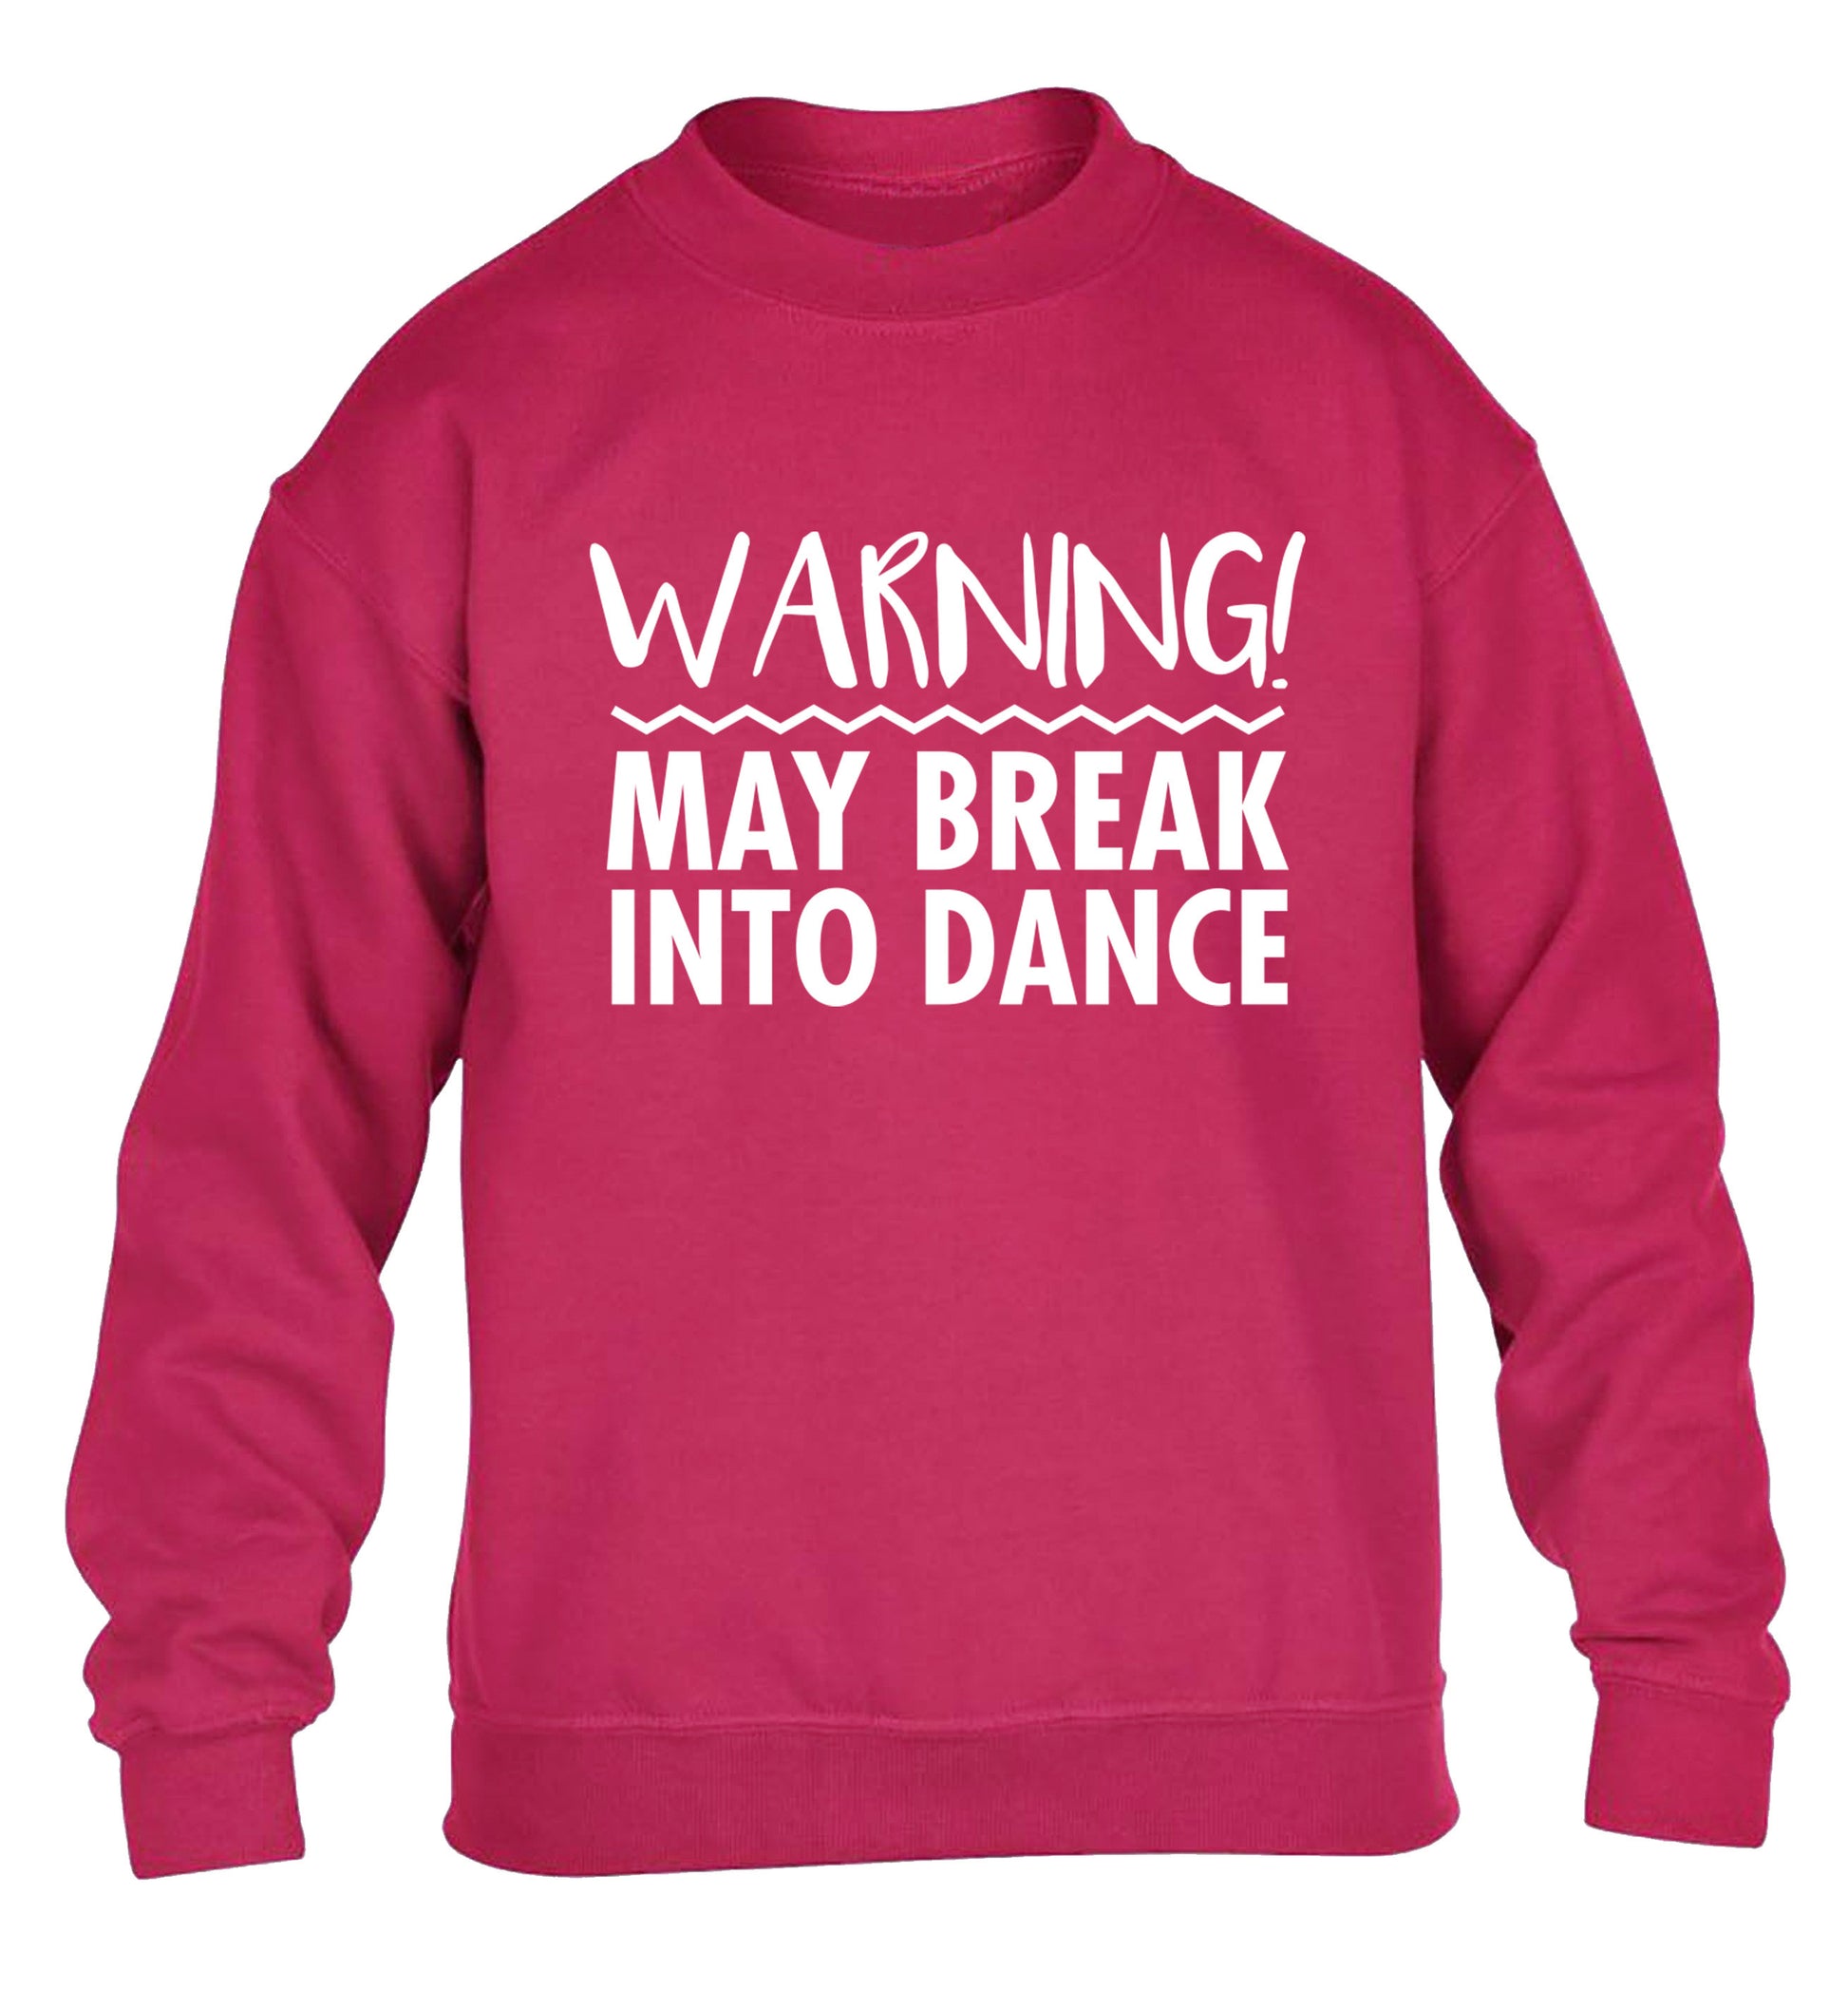 Warning may break into dance children's pink sweater 12-14 Years